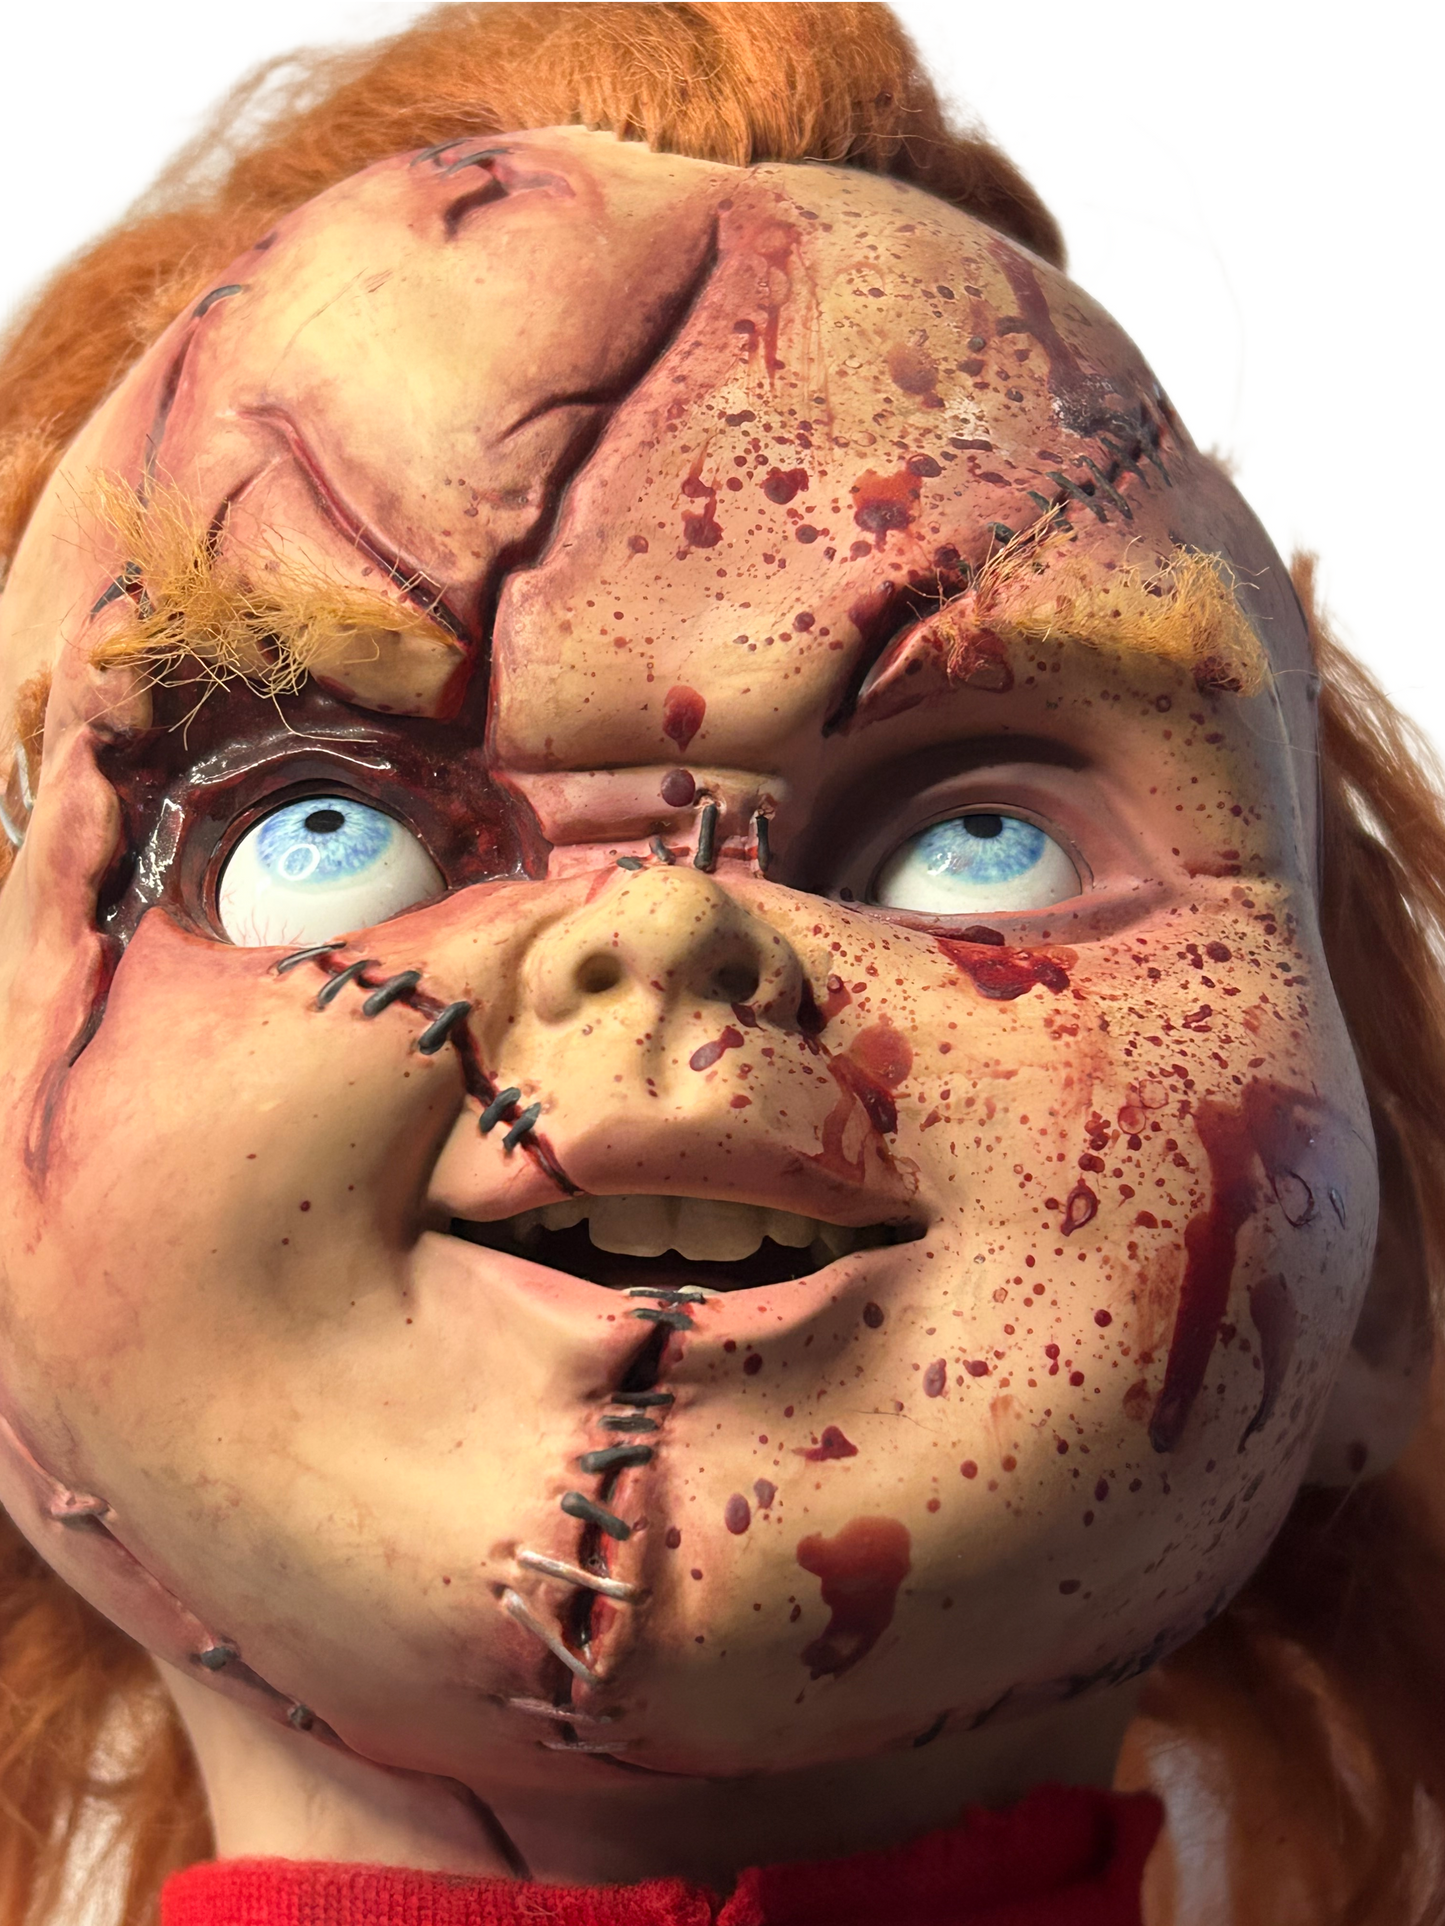 Ripper - Bride Of Chucky - Chucky Doll (Voice Box Included)